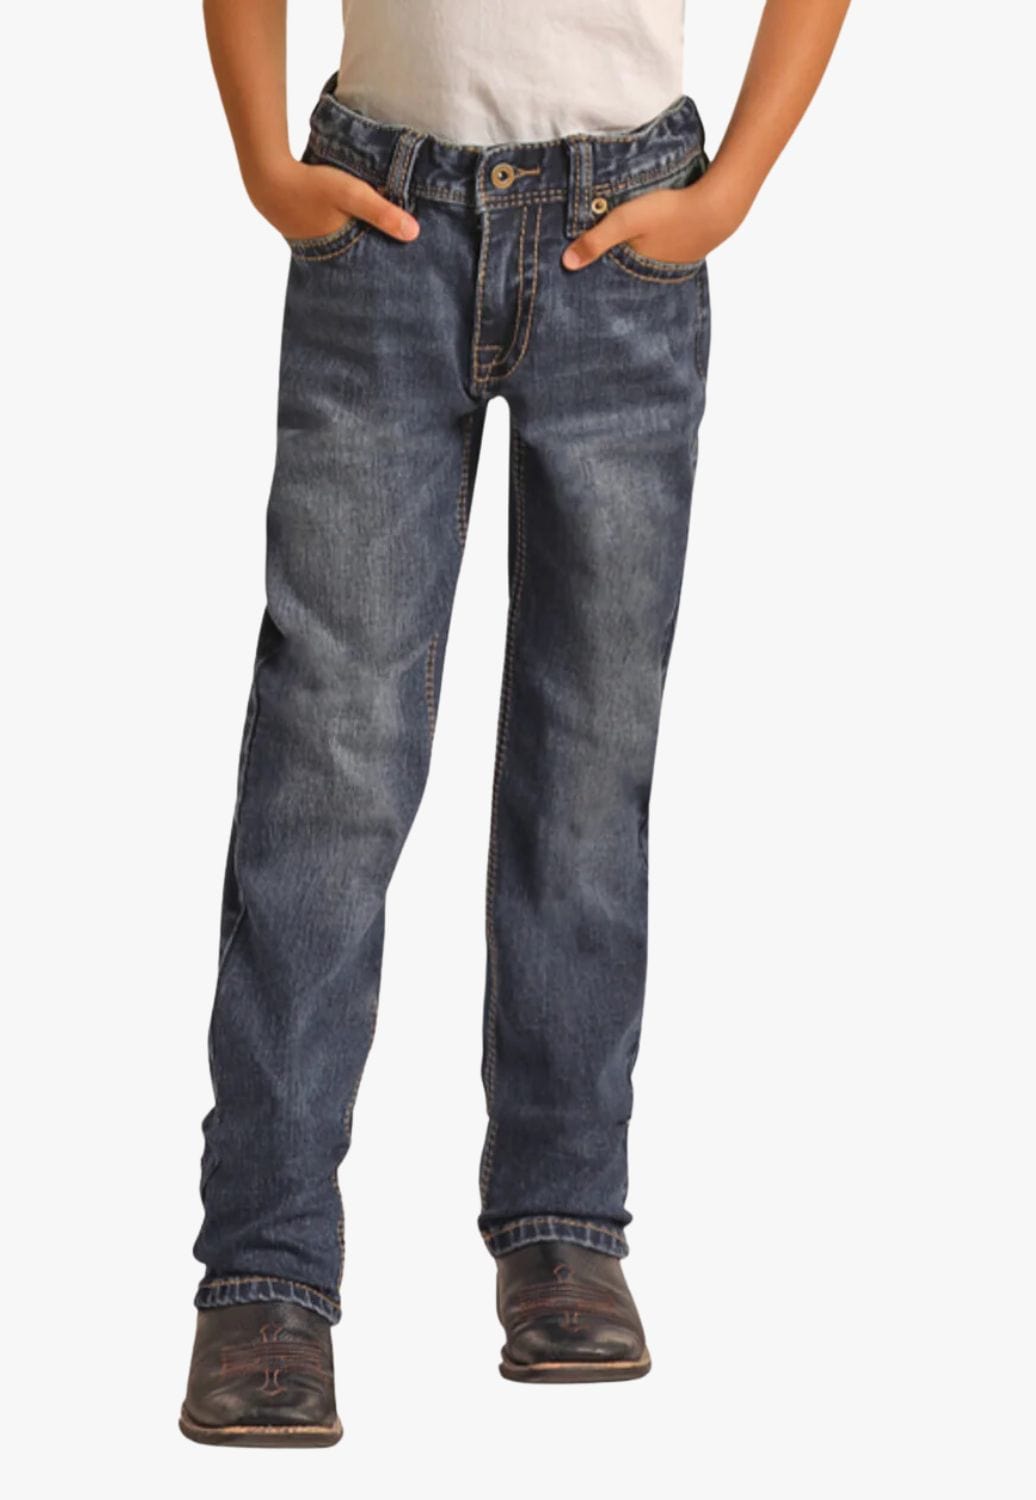 Levis Jeans Boys 10 22x26 Slim Black 417 Bootcut Youth Denim Pants 80s 90s  | eBay